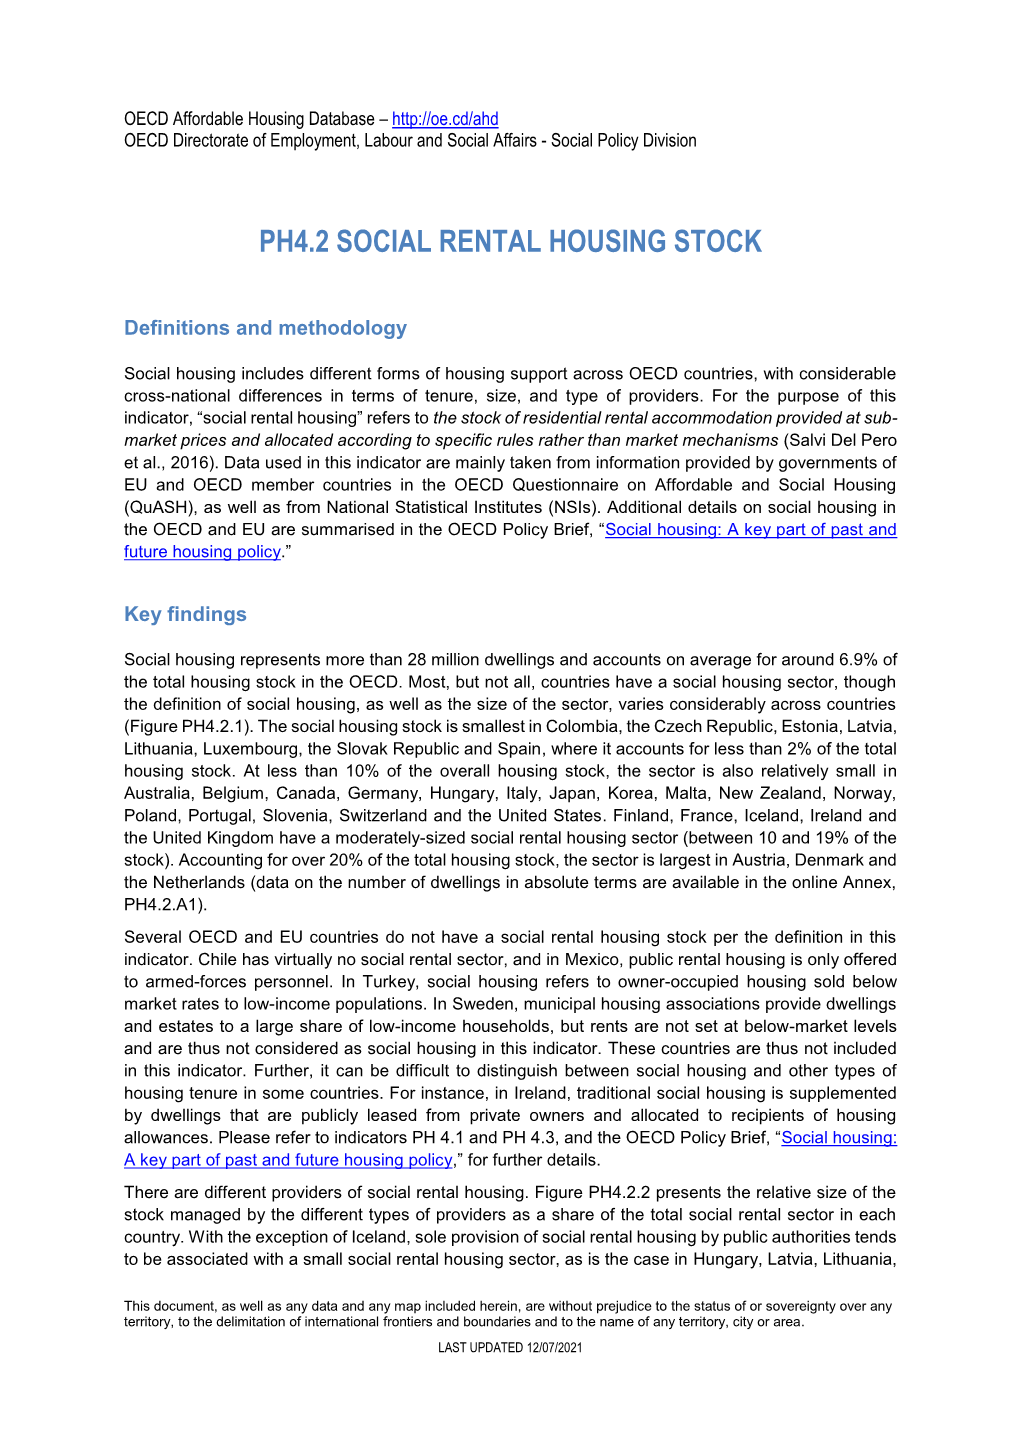 Ph4.2 Social Rental Housing Stock